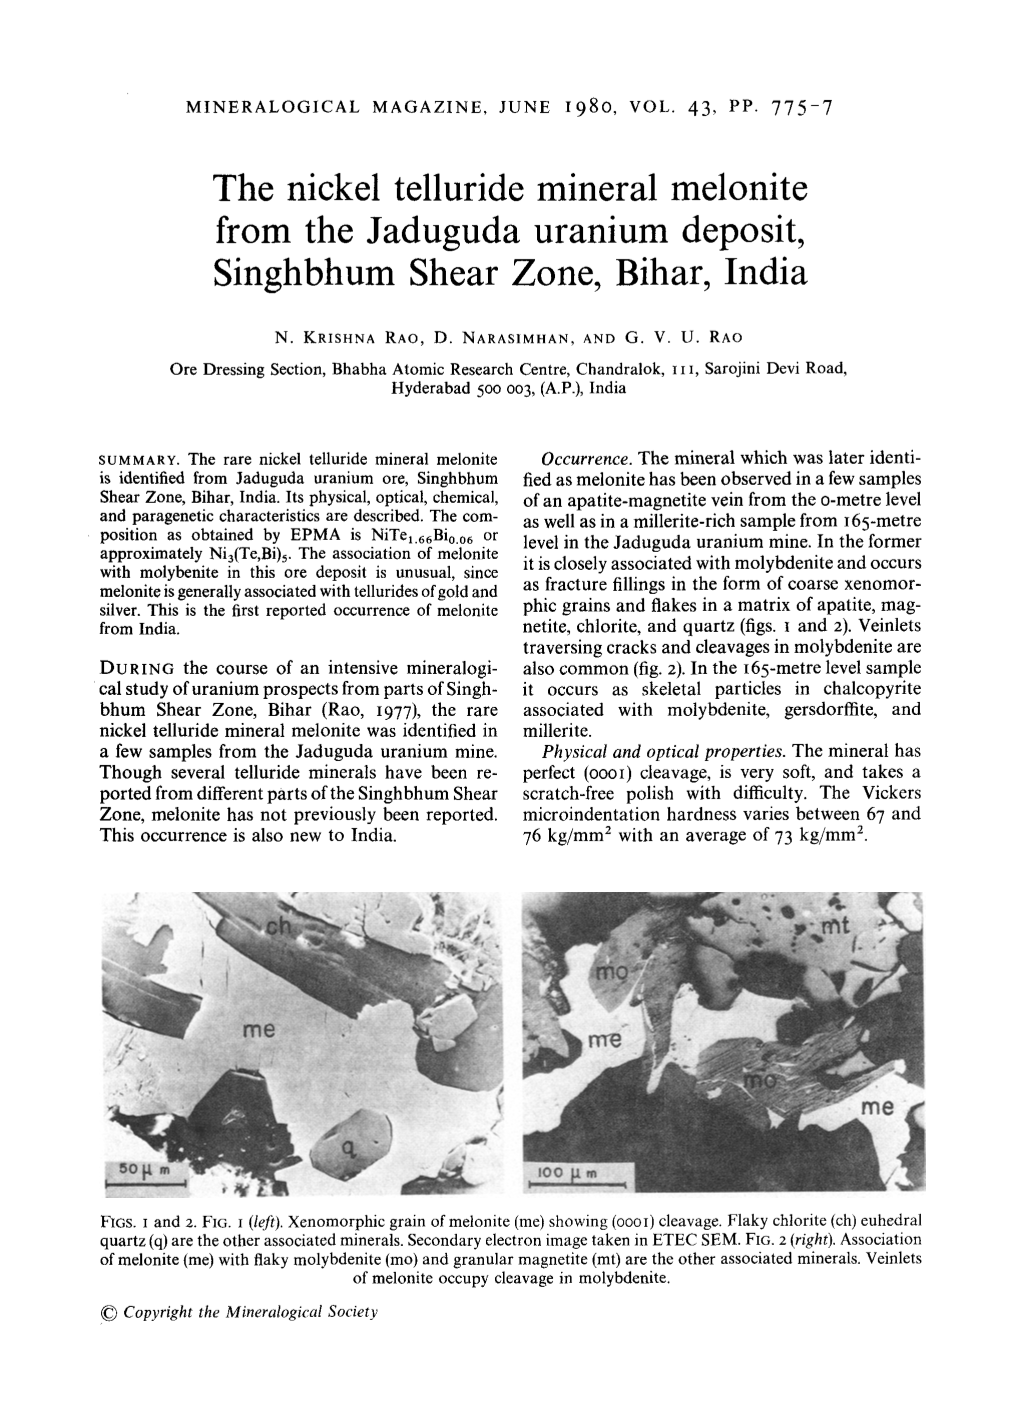 The Nickel Telluride Mineral Melonite from the Jaduguda Uranium Deposit, Singhbhum Shear Zone, Bihar, India